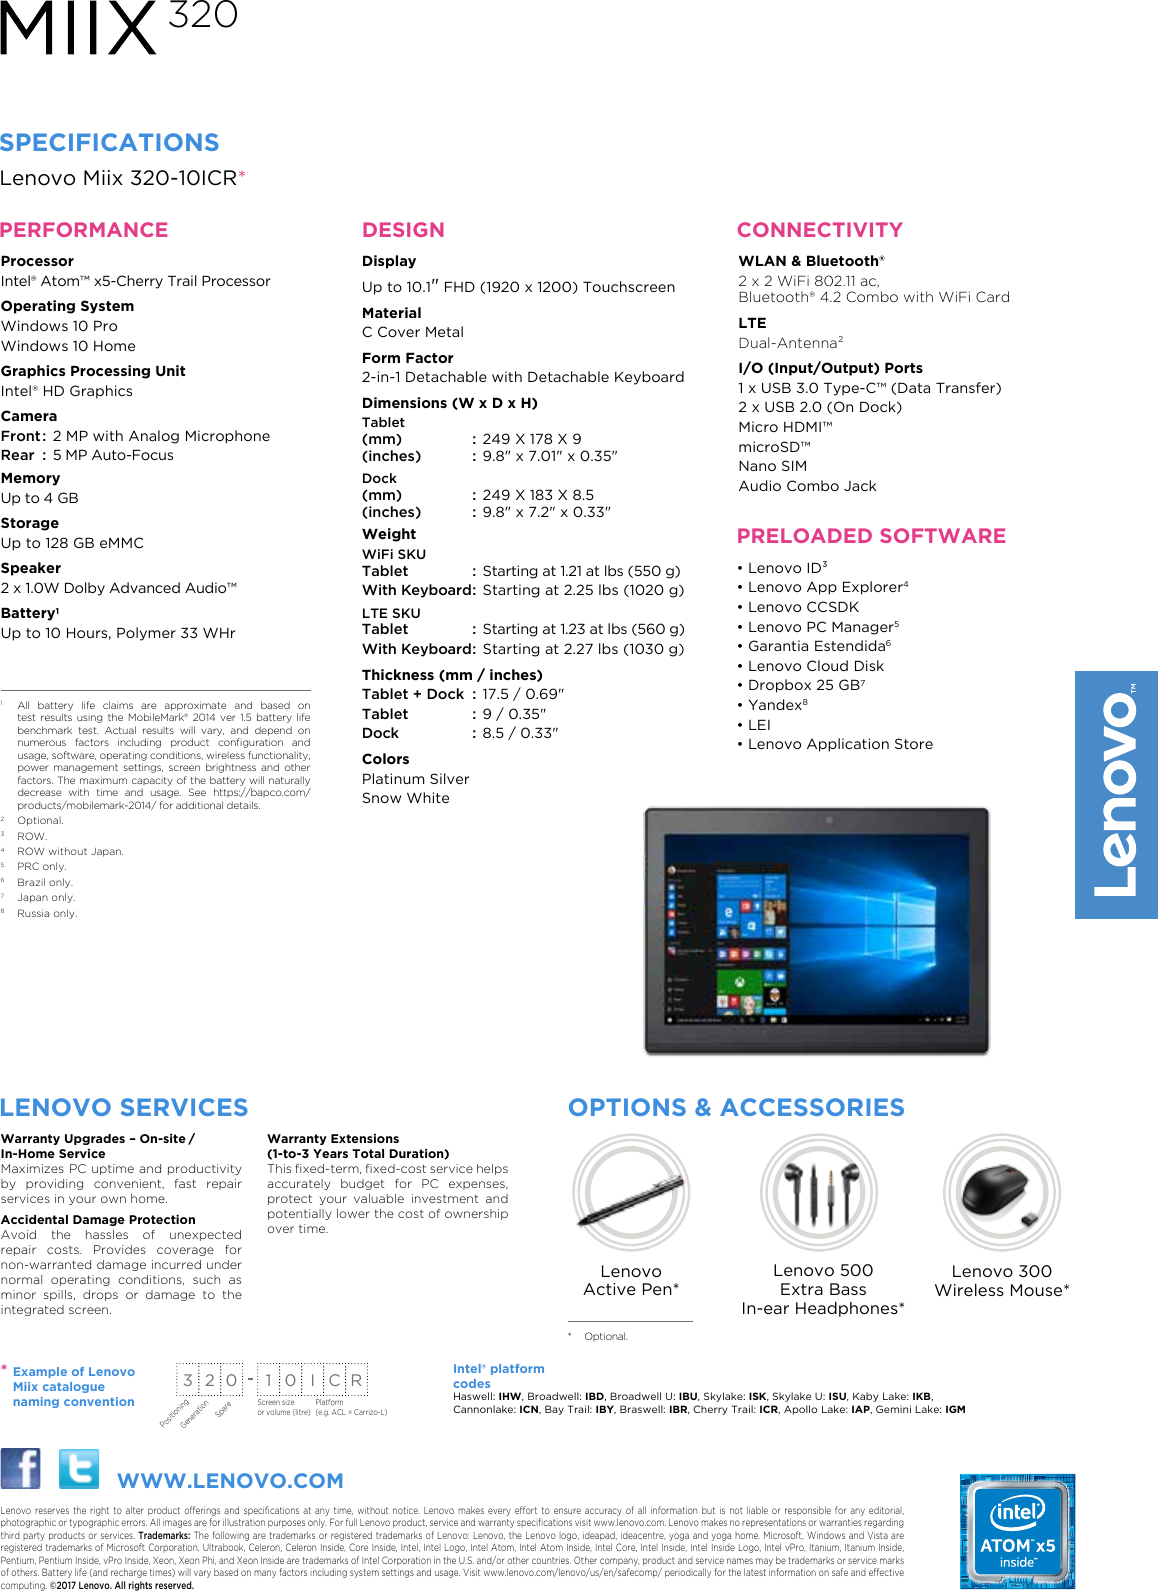 Page 2 of 2 - Lenovo Miix 320-10ICR_DS Miix-320-datasheet